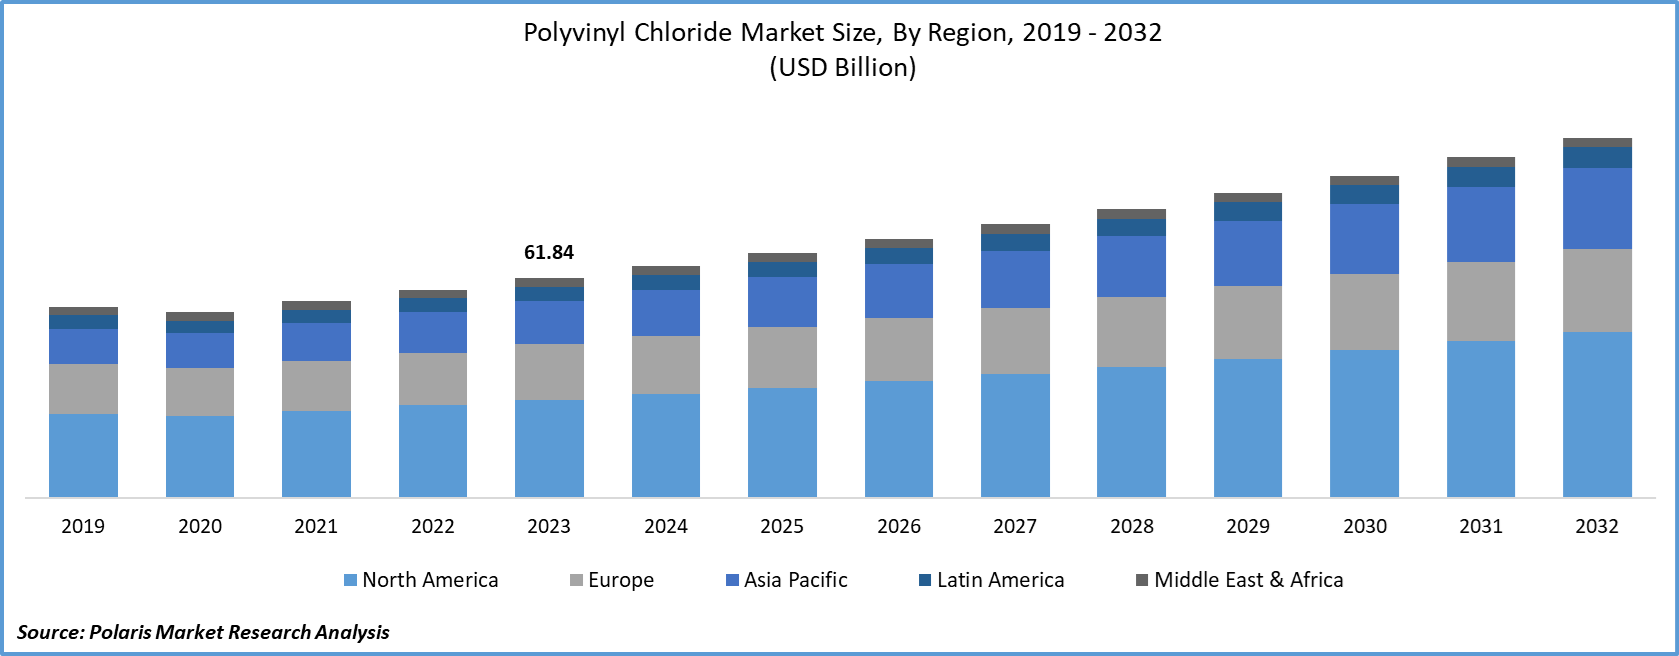 Polyvinyl Chloride (PVC) Market By Region